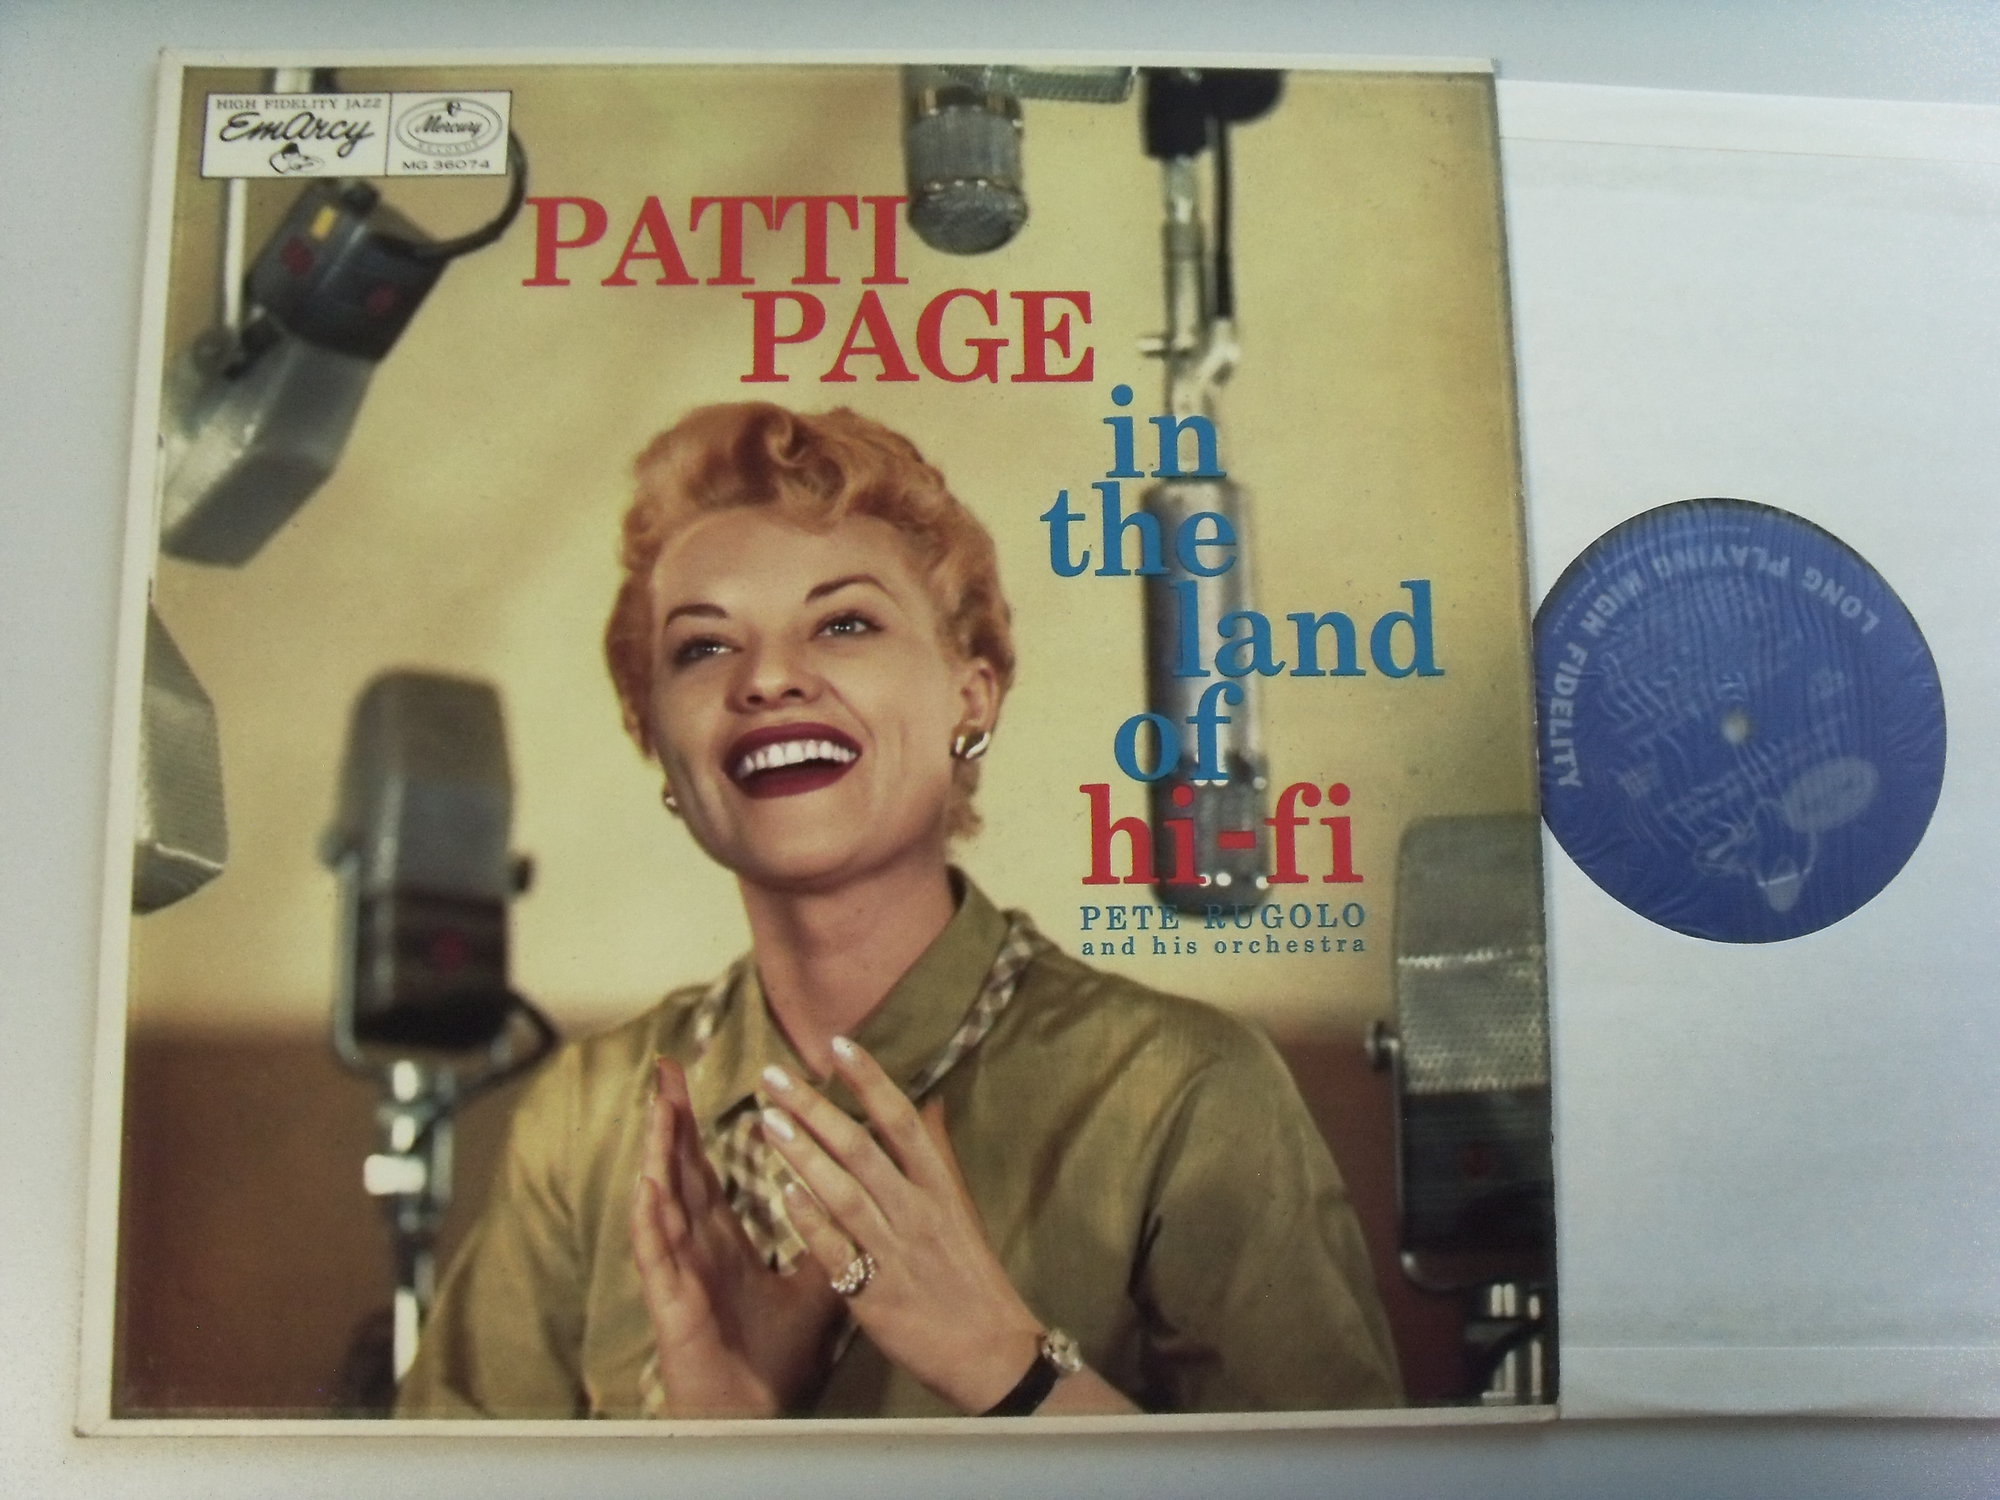 Patti PAGE Patti Page in the land of hi-fi